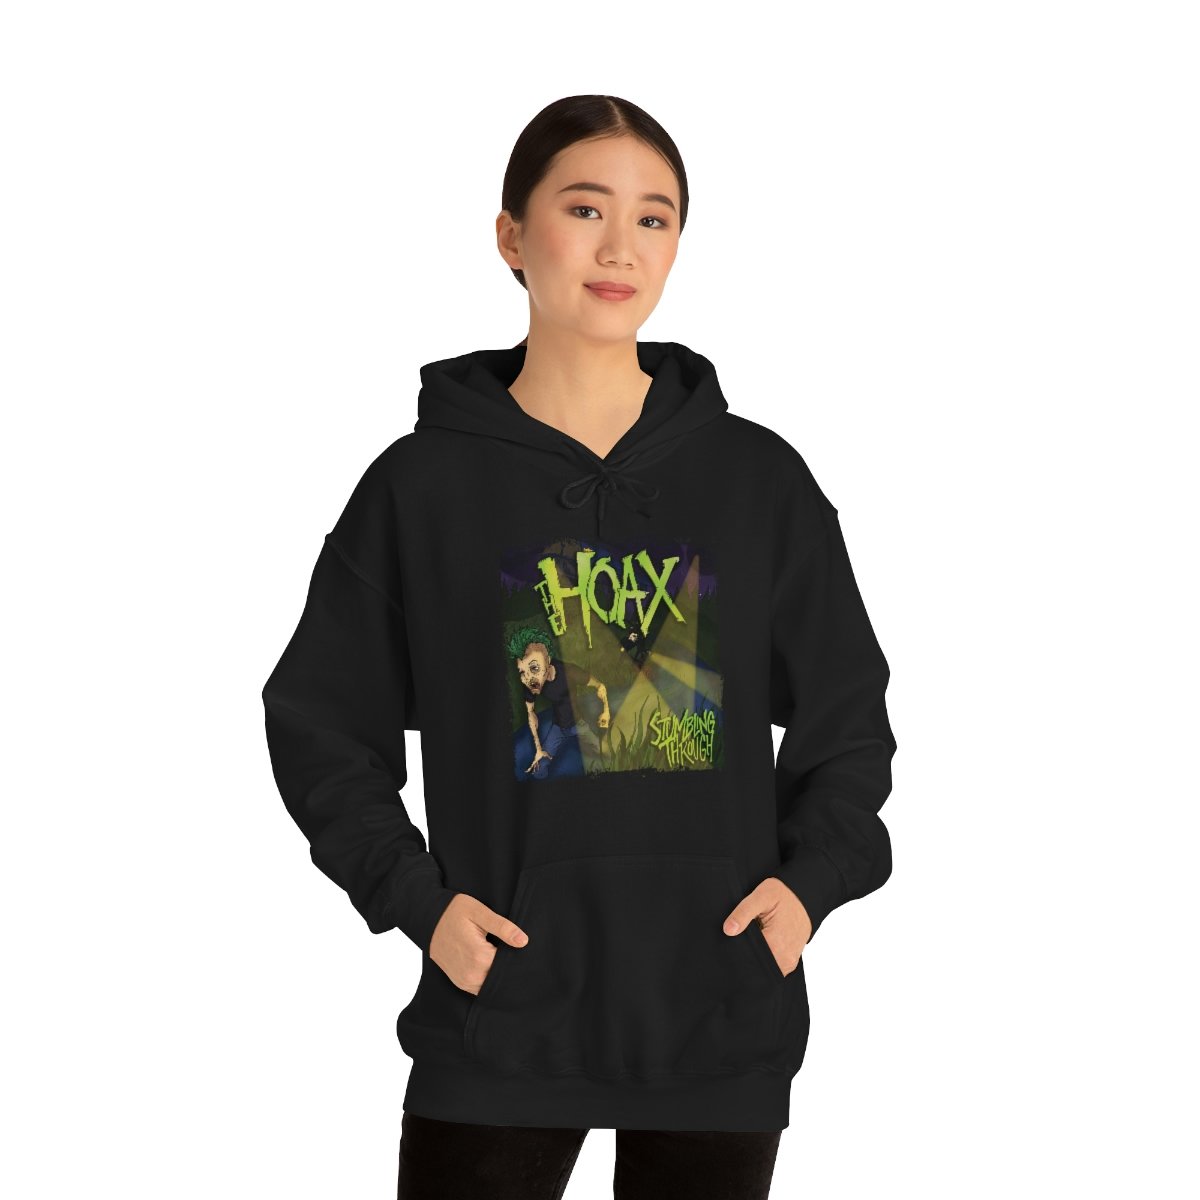 The Hoax – Stumbling Through (TPR) Pullover Hooded Sweatshirt